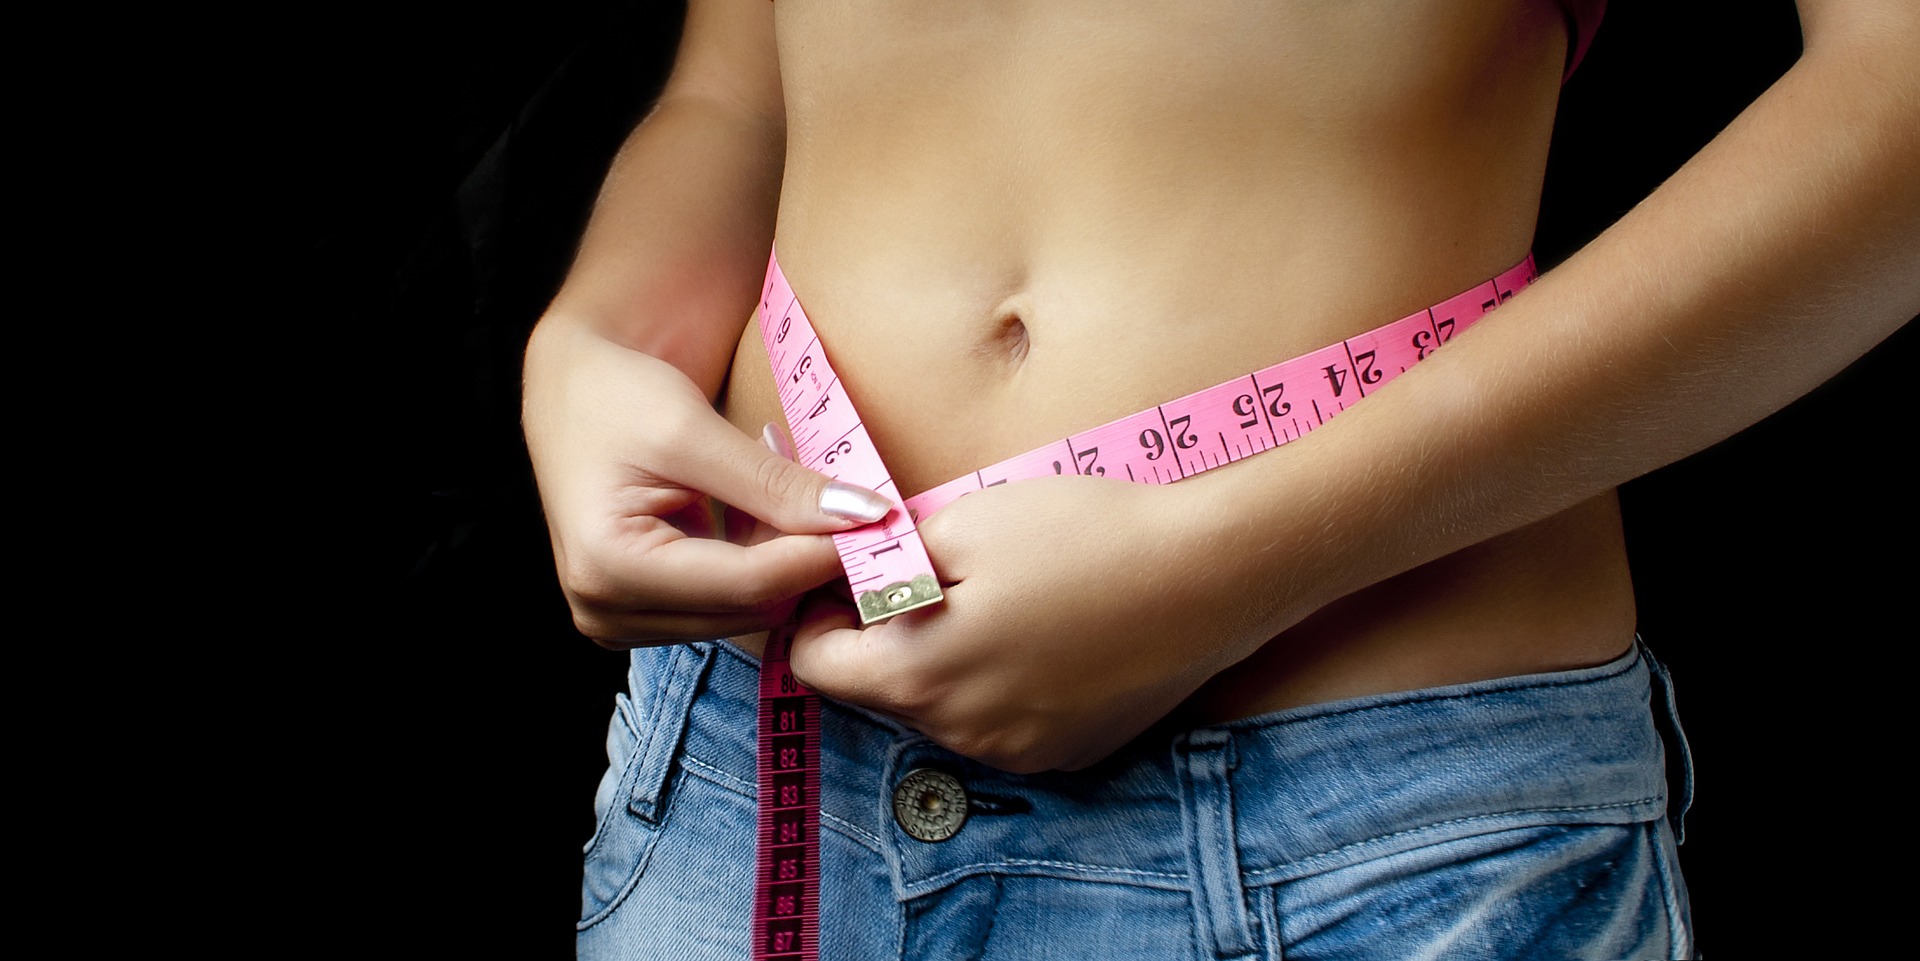 liposuction growing in popularity